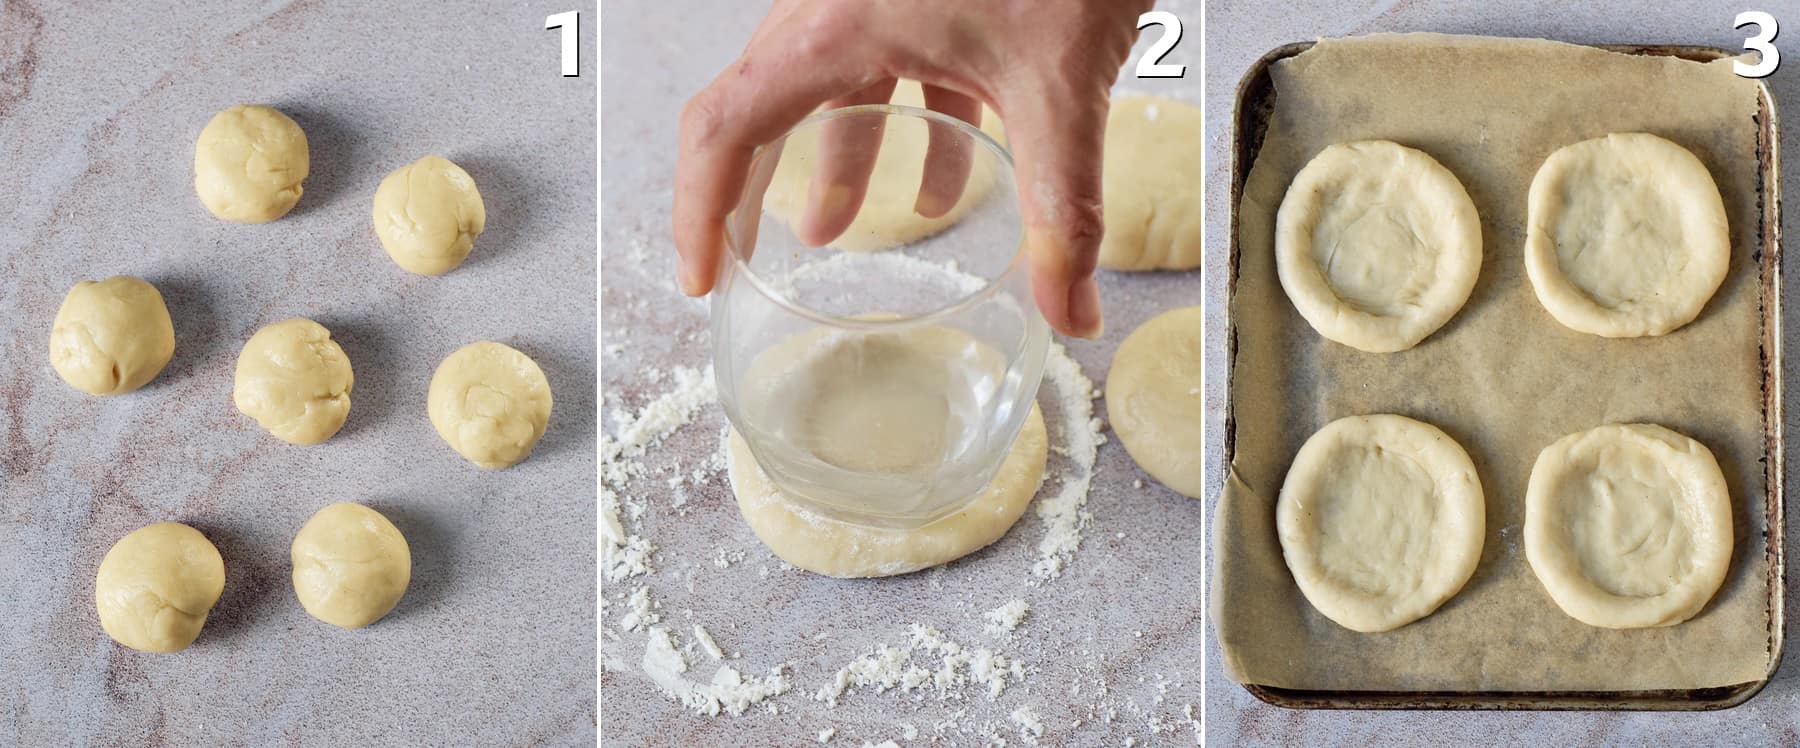 3 Schritt-für-Schritt-Fotos, wie man süßen Hefeteig zu Kolatschen formt